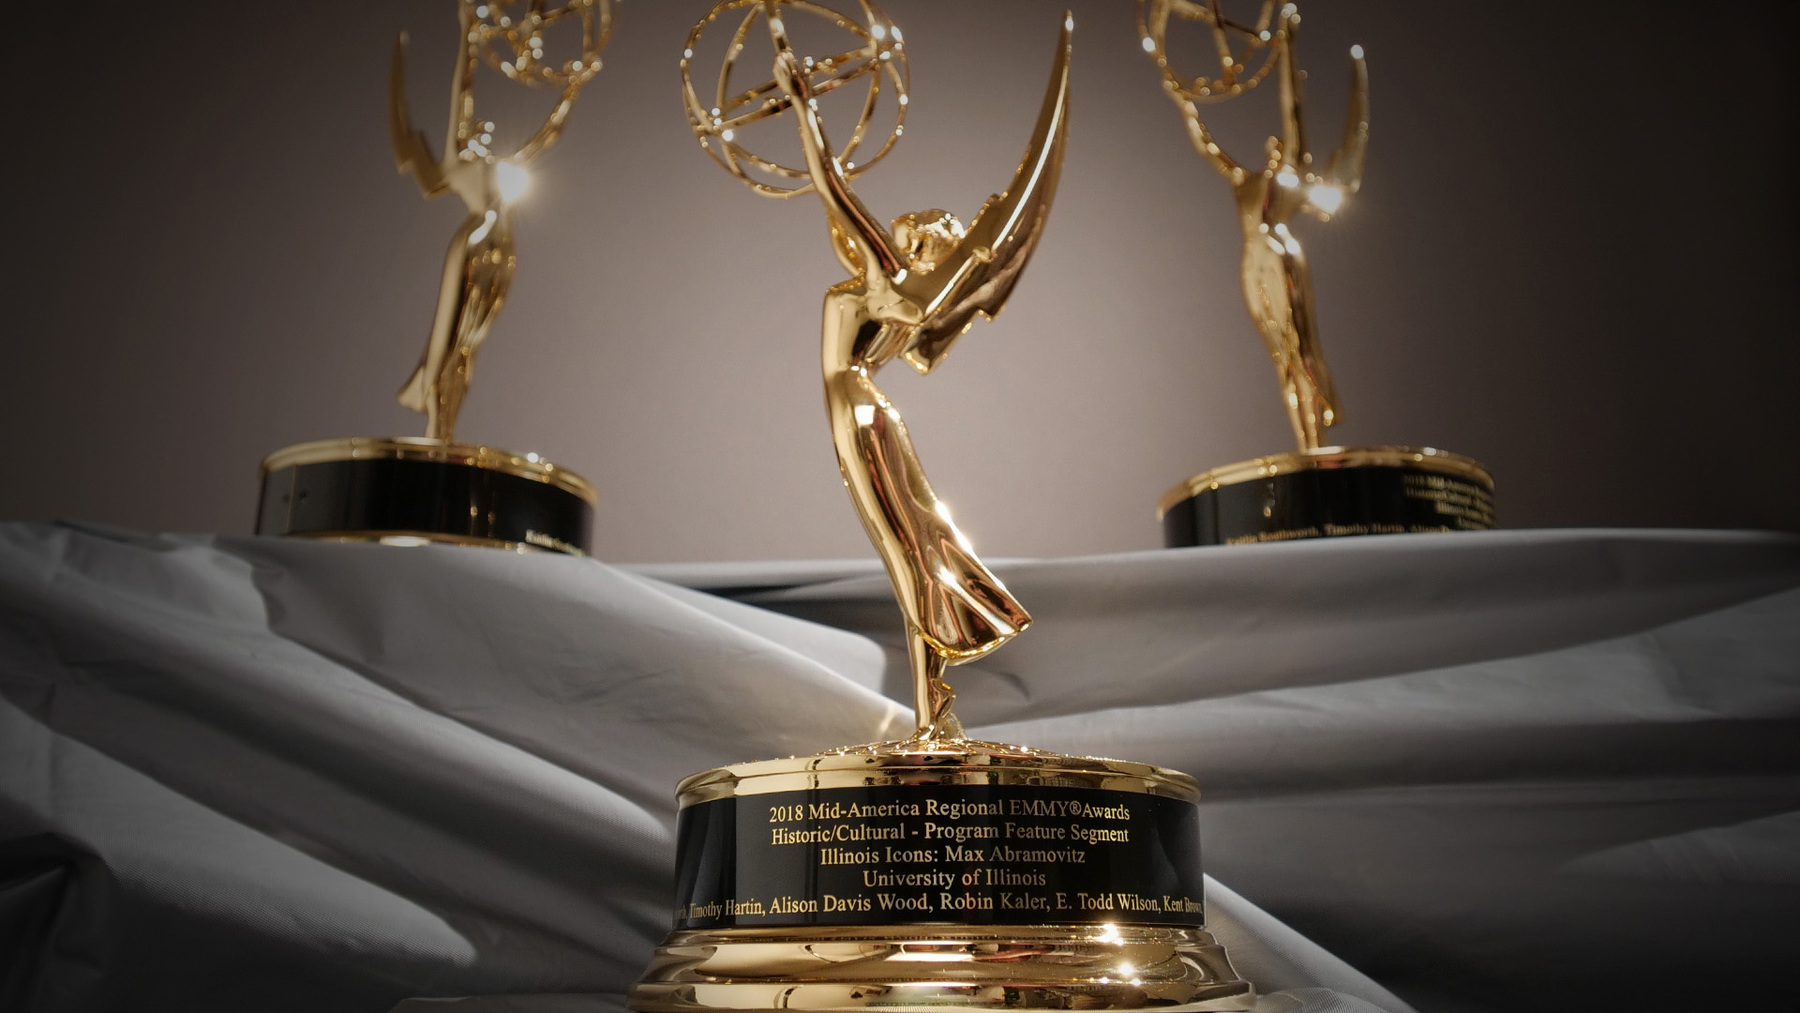 Midwest Regional Emmy Award statues